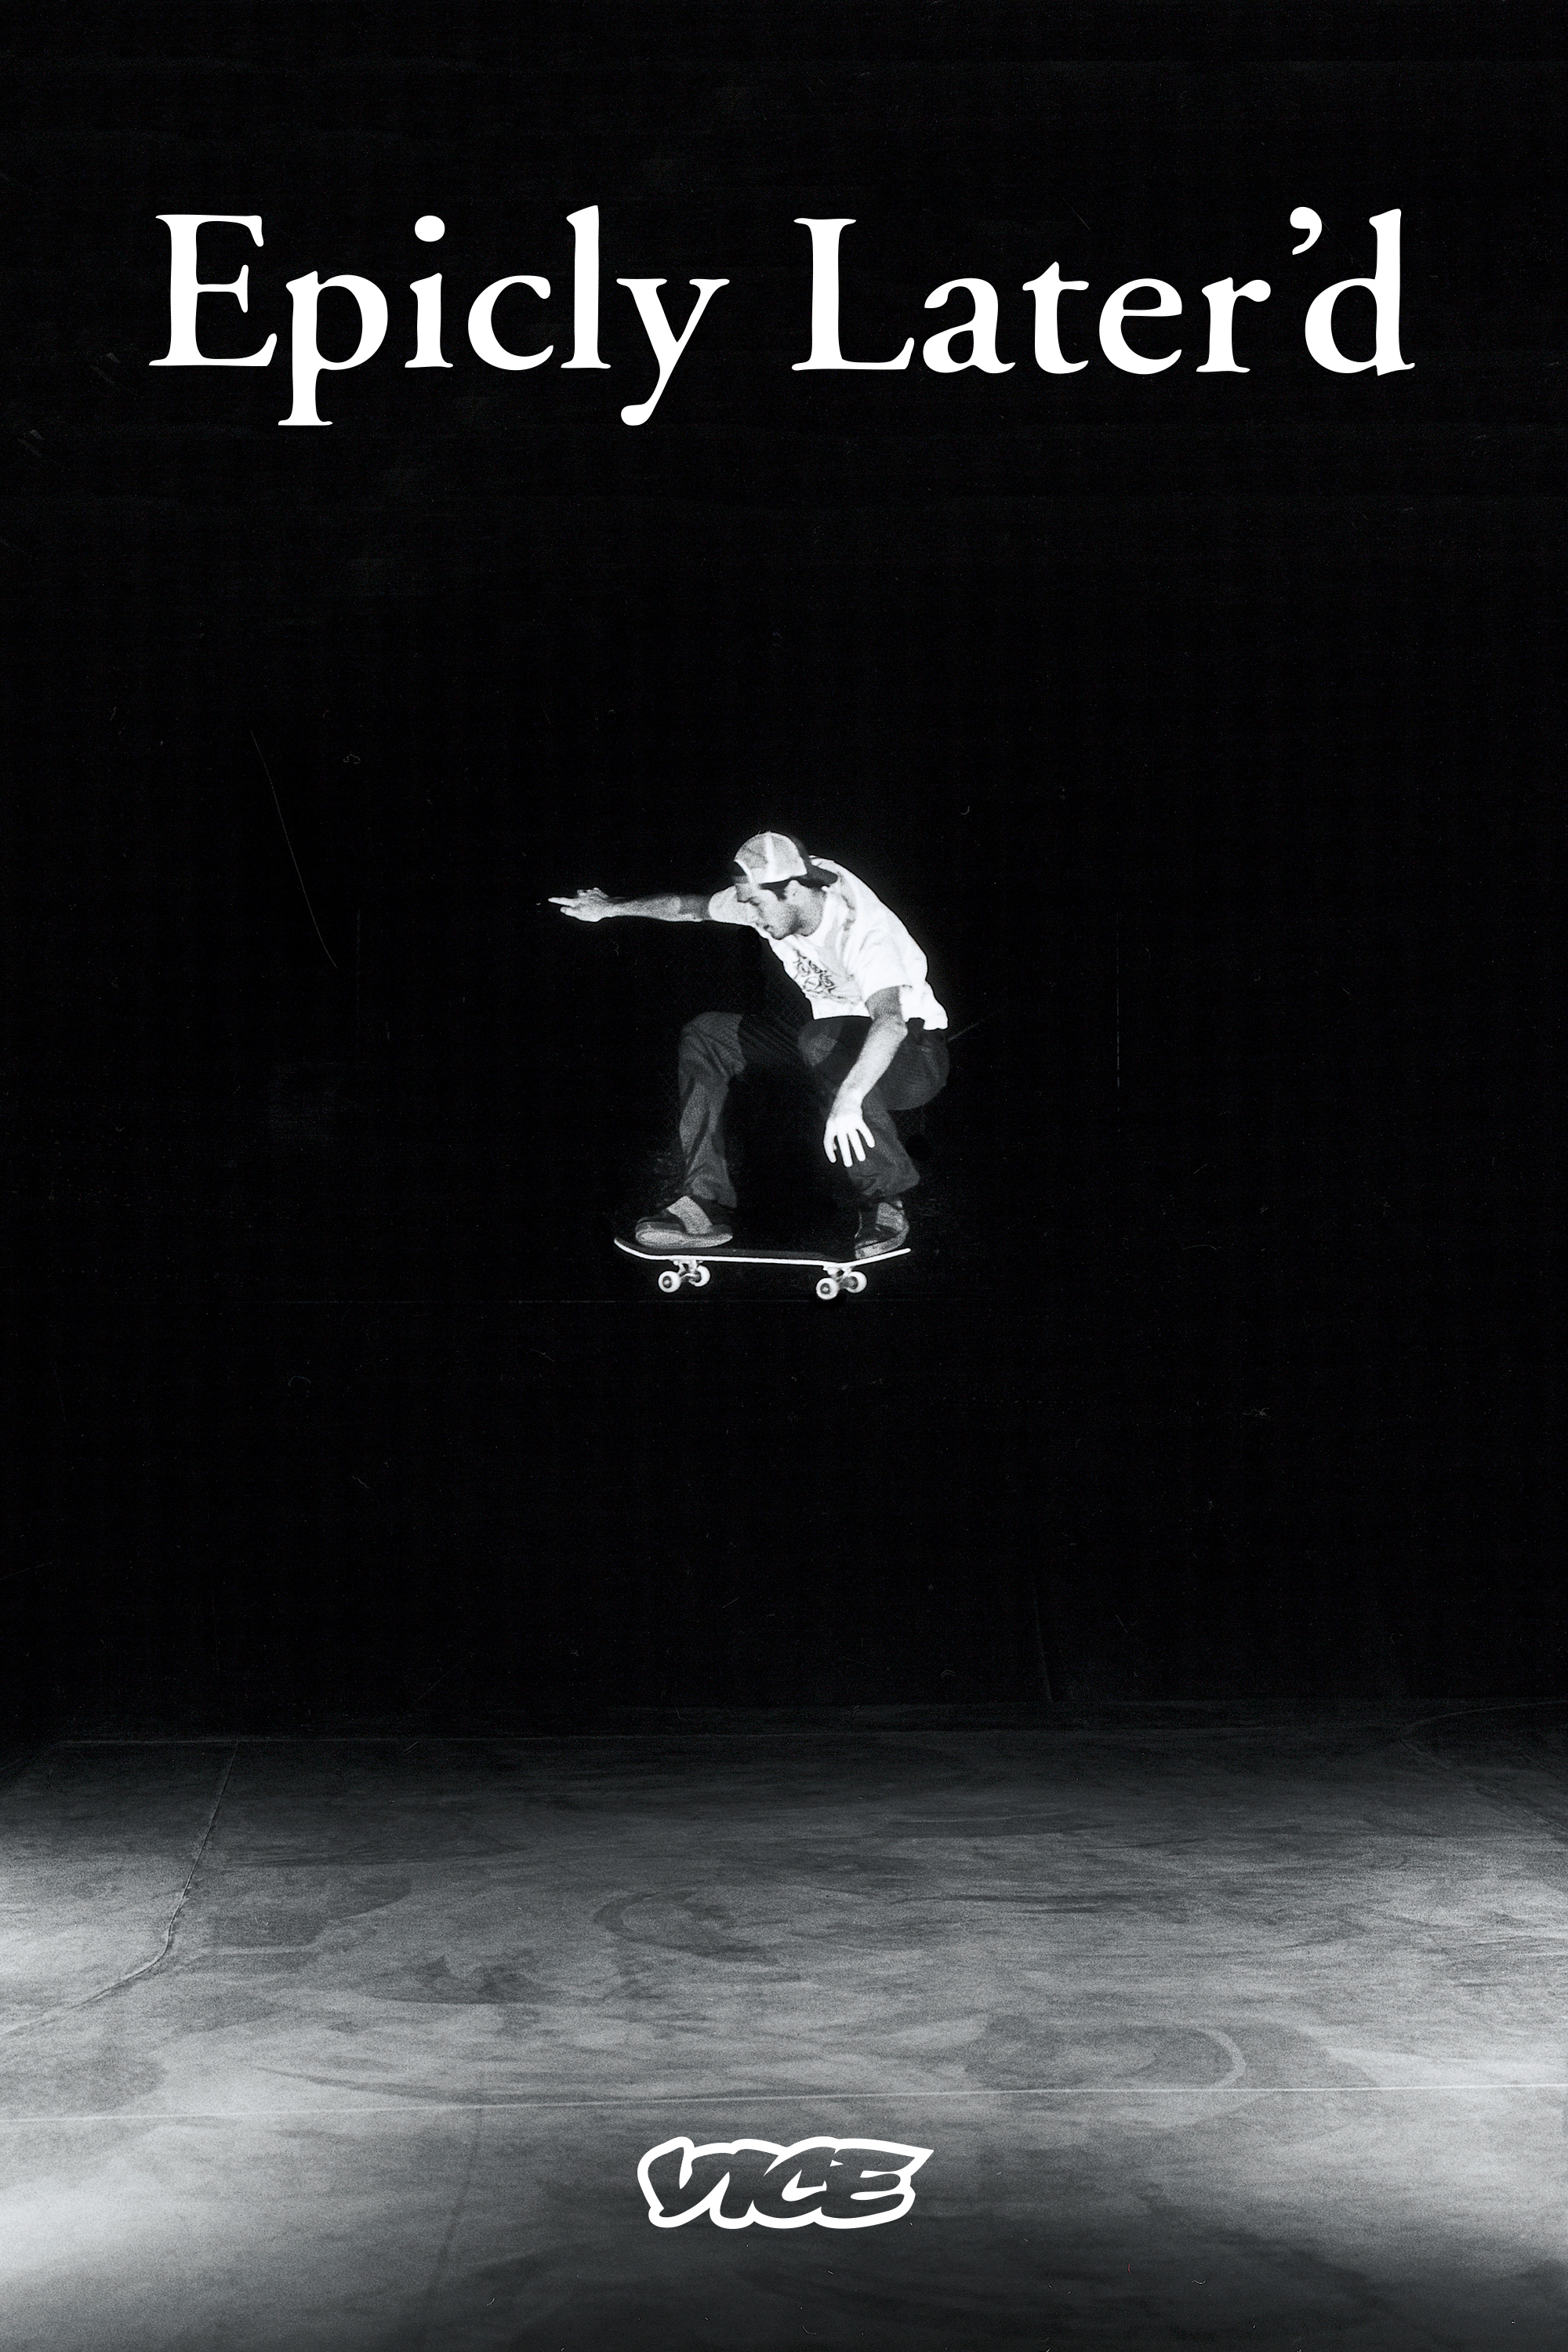 Vice Documentary John Cardiel skateboarding Epicly Later’d DVD 